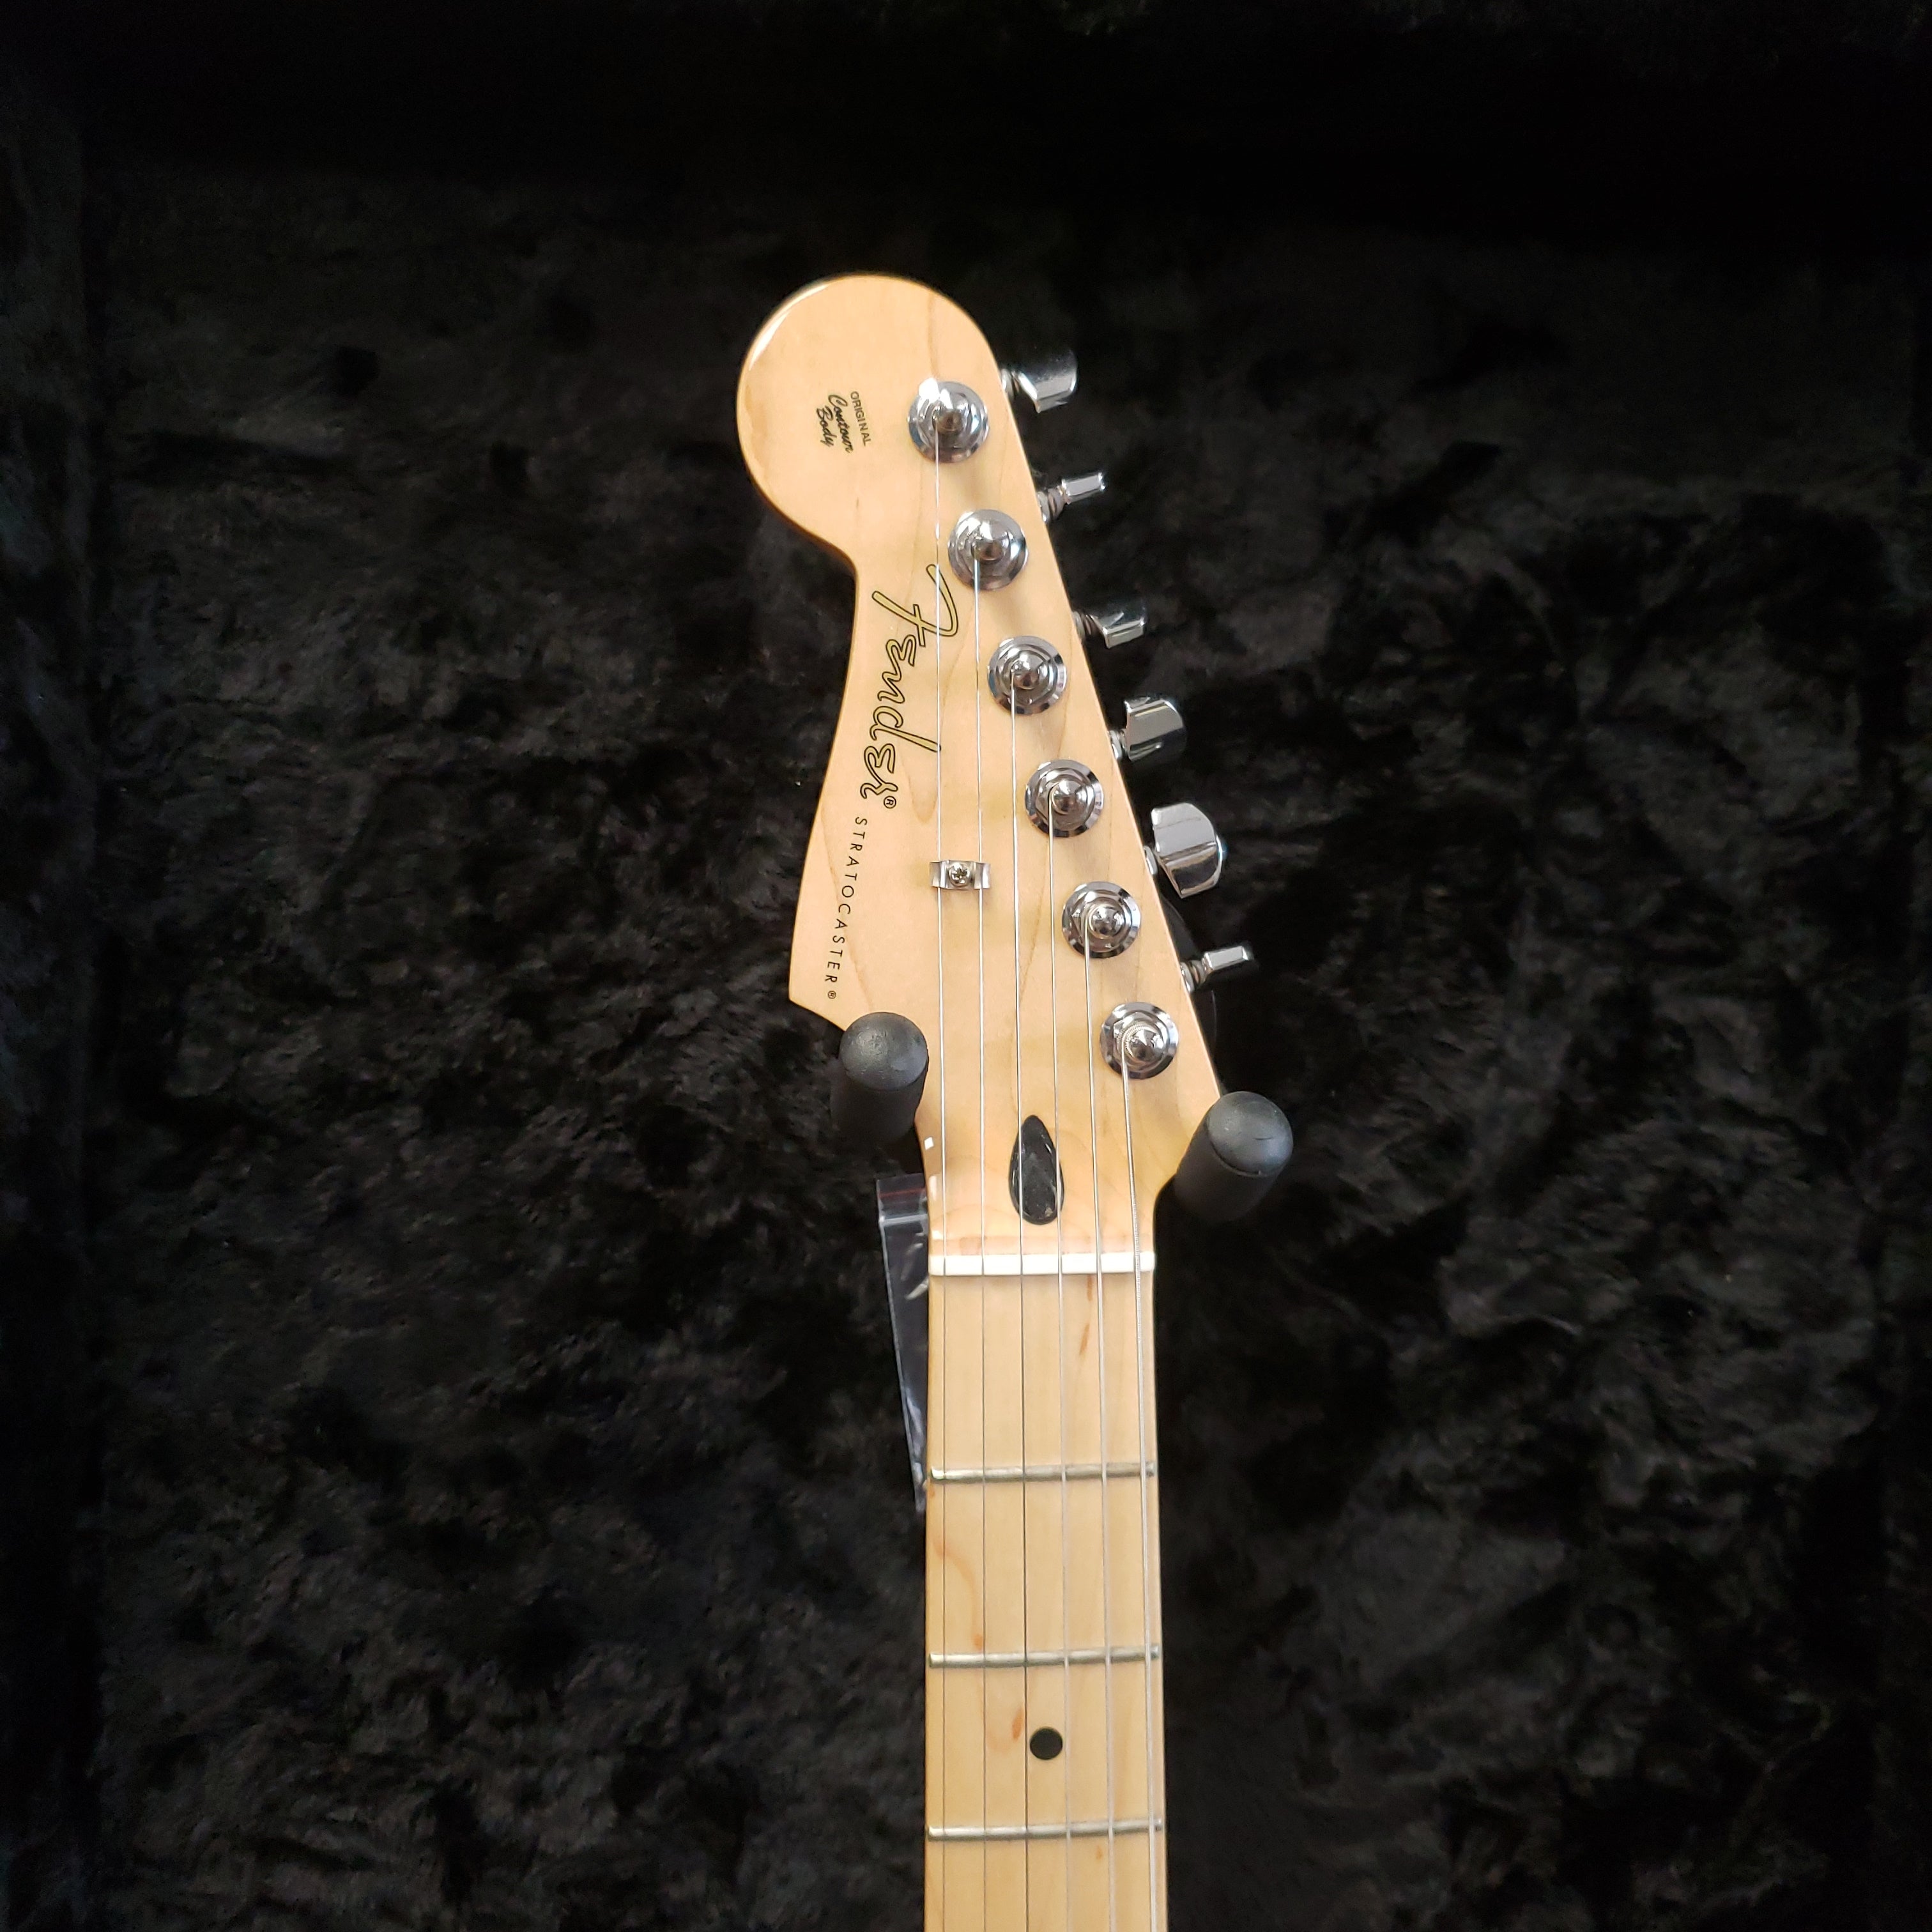 Fender Player Stratocaster Left Handed Capri Orange F-0144512582 FLOOR MODEL-SMALL DING SERIAL NUMBER MX20165012 - 7.6 LBS